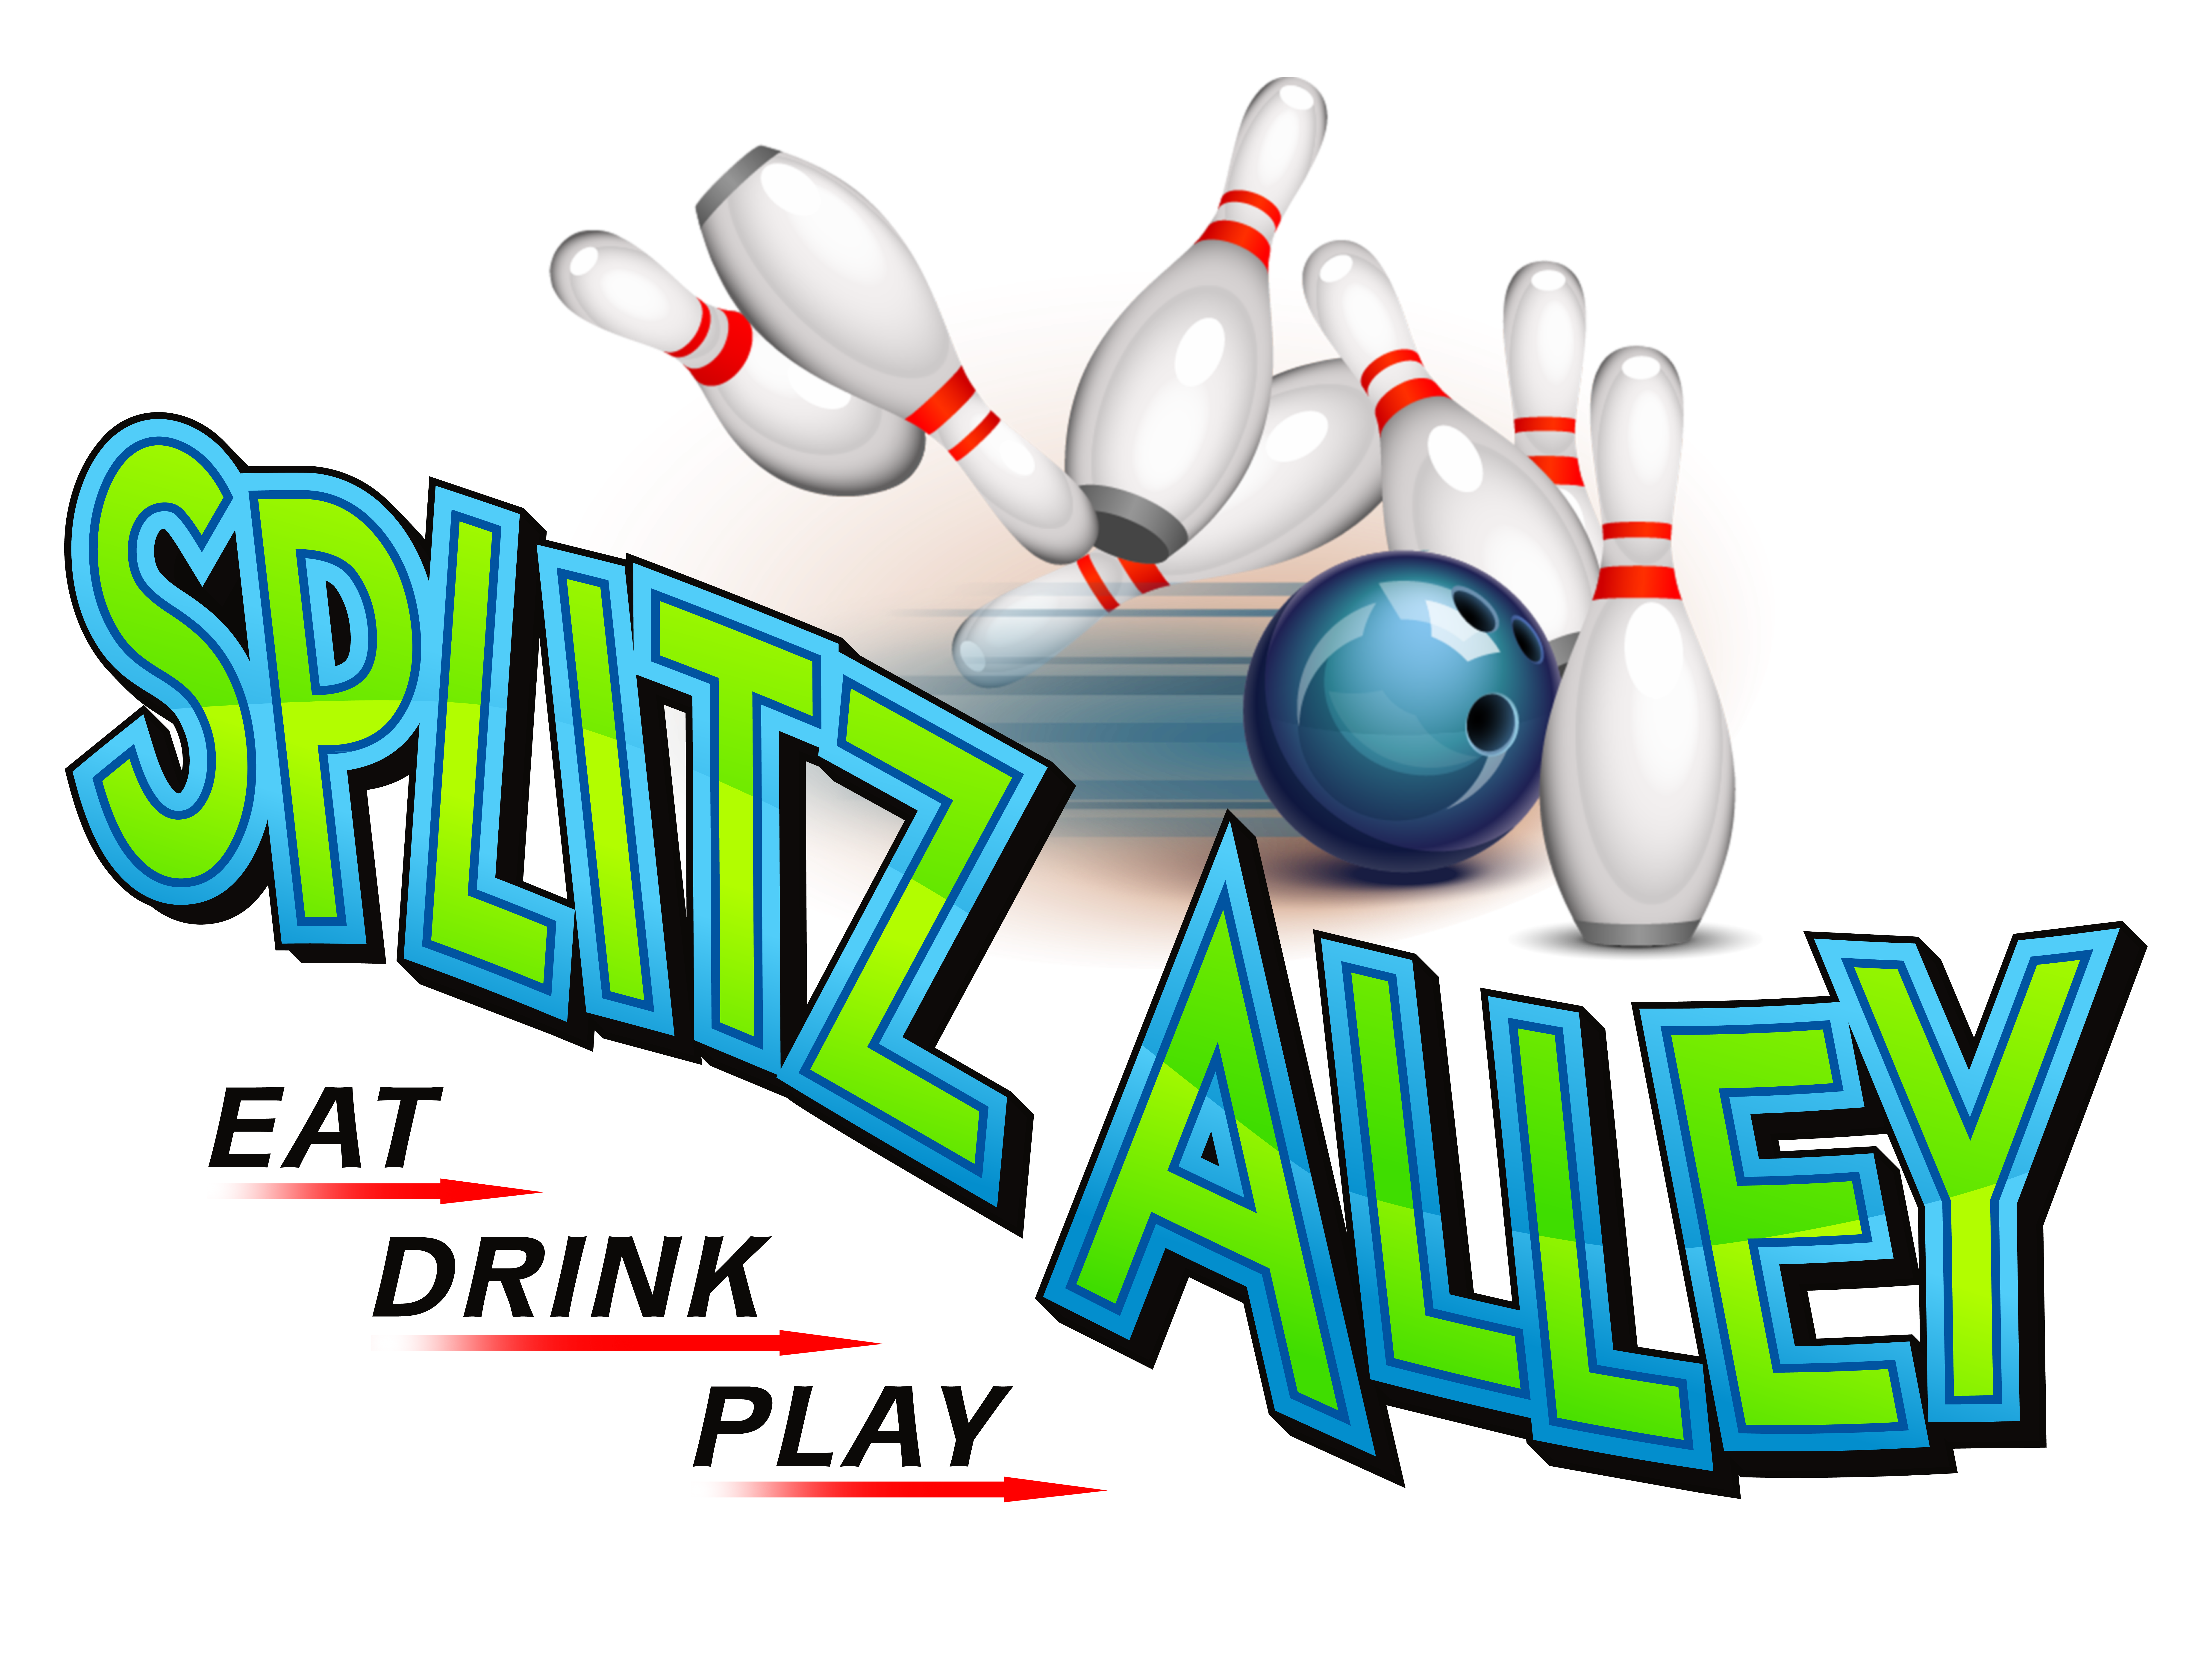 Splitz Alley